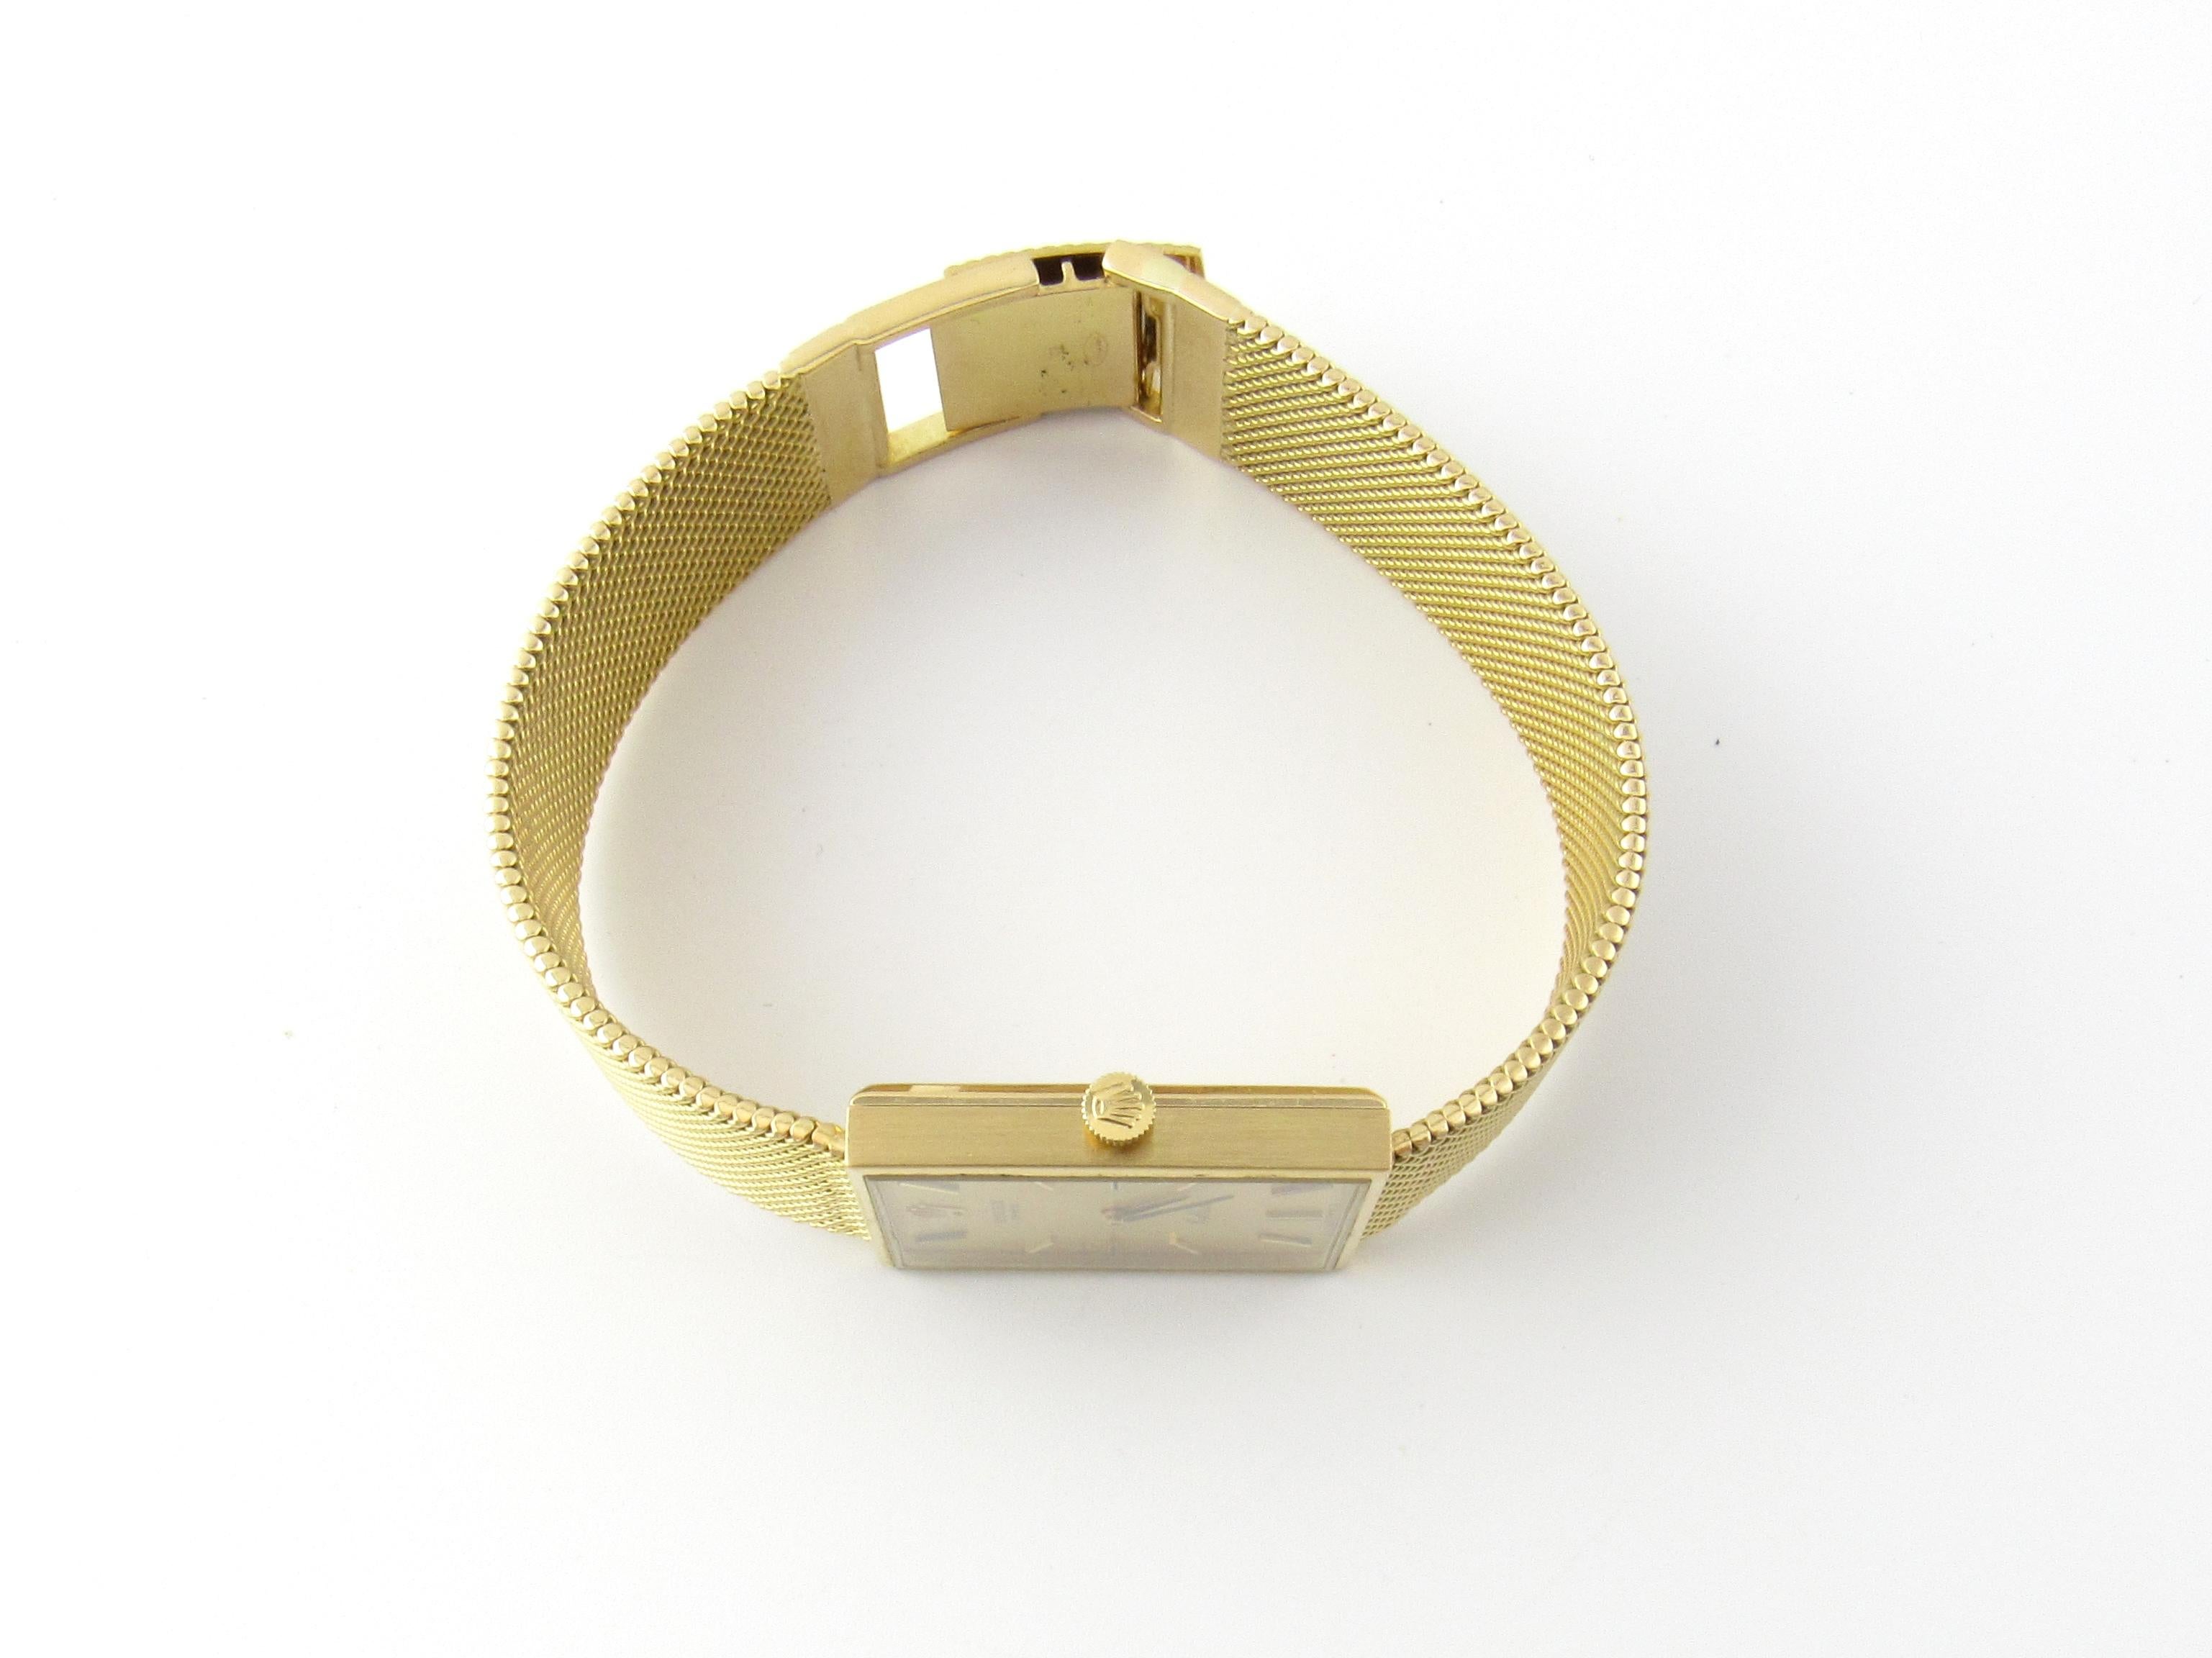 1970s Rolex 18 Karat Yellow Gold Cellini Watch 4089 1600 Caliber Movement 5